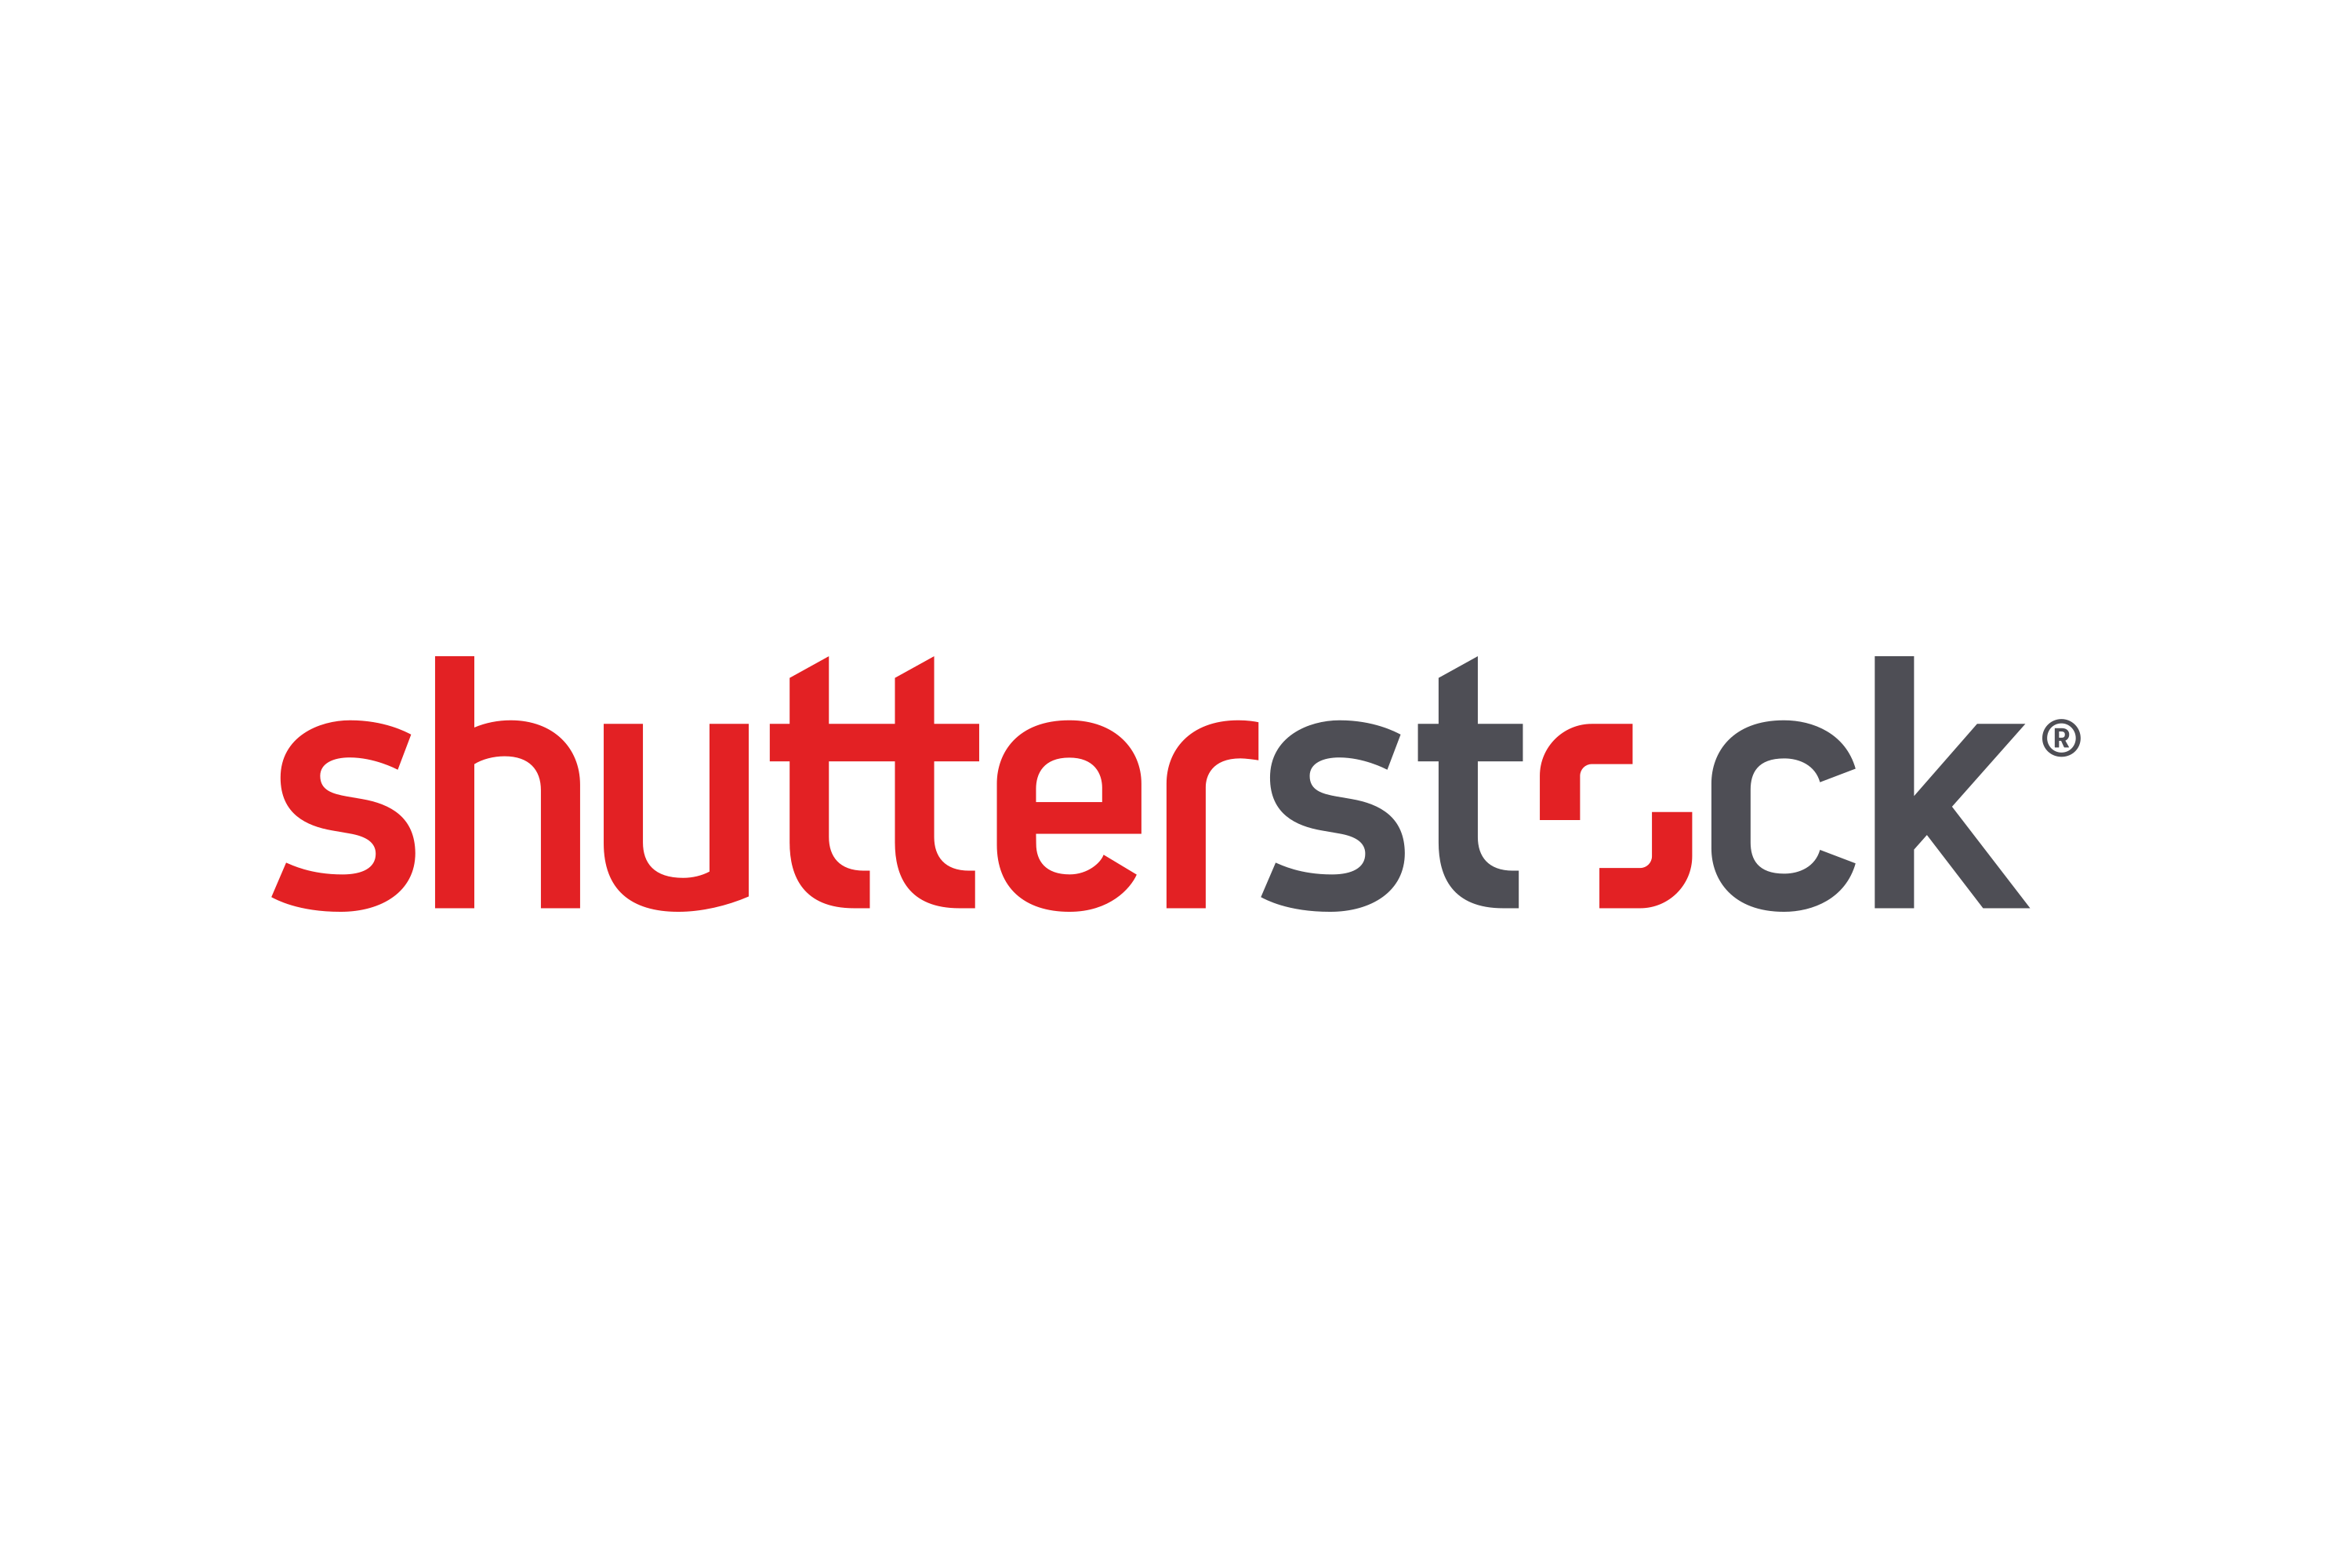 An image of Shutterstock